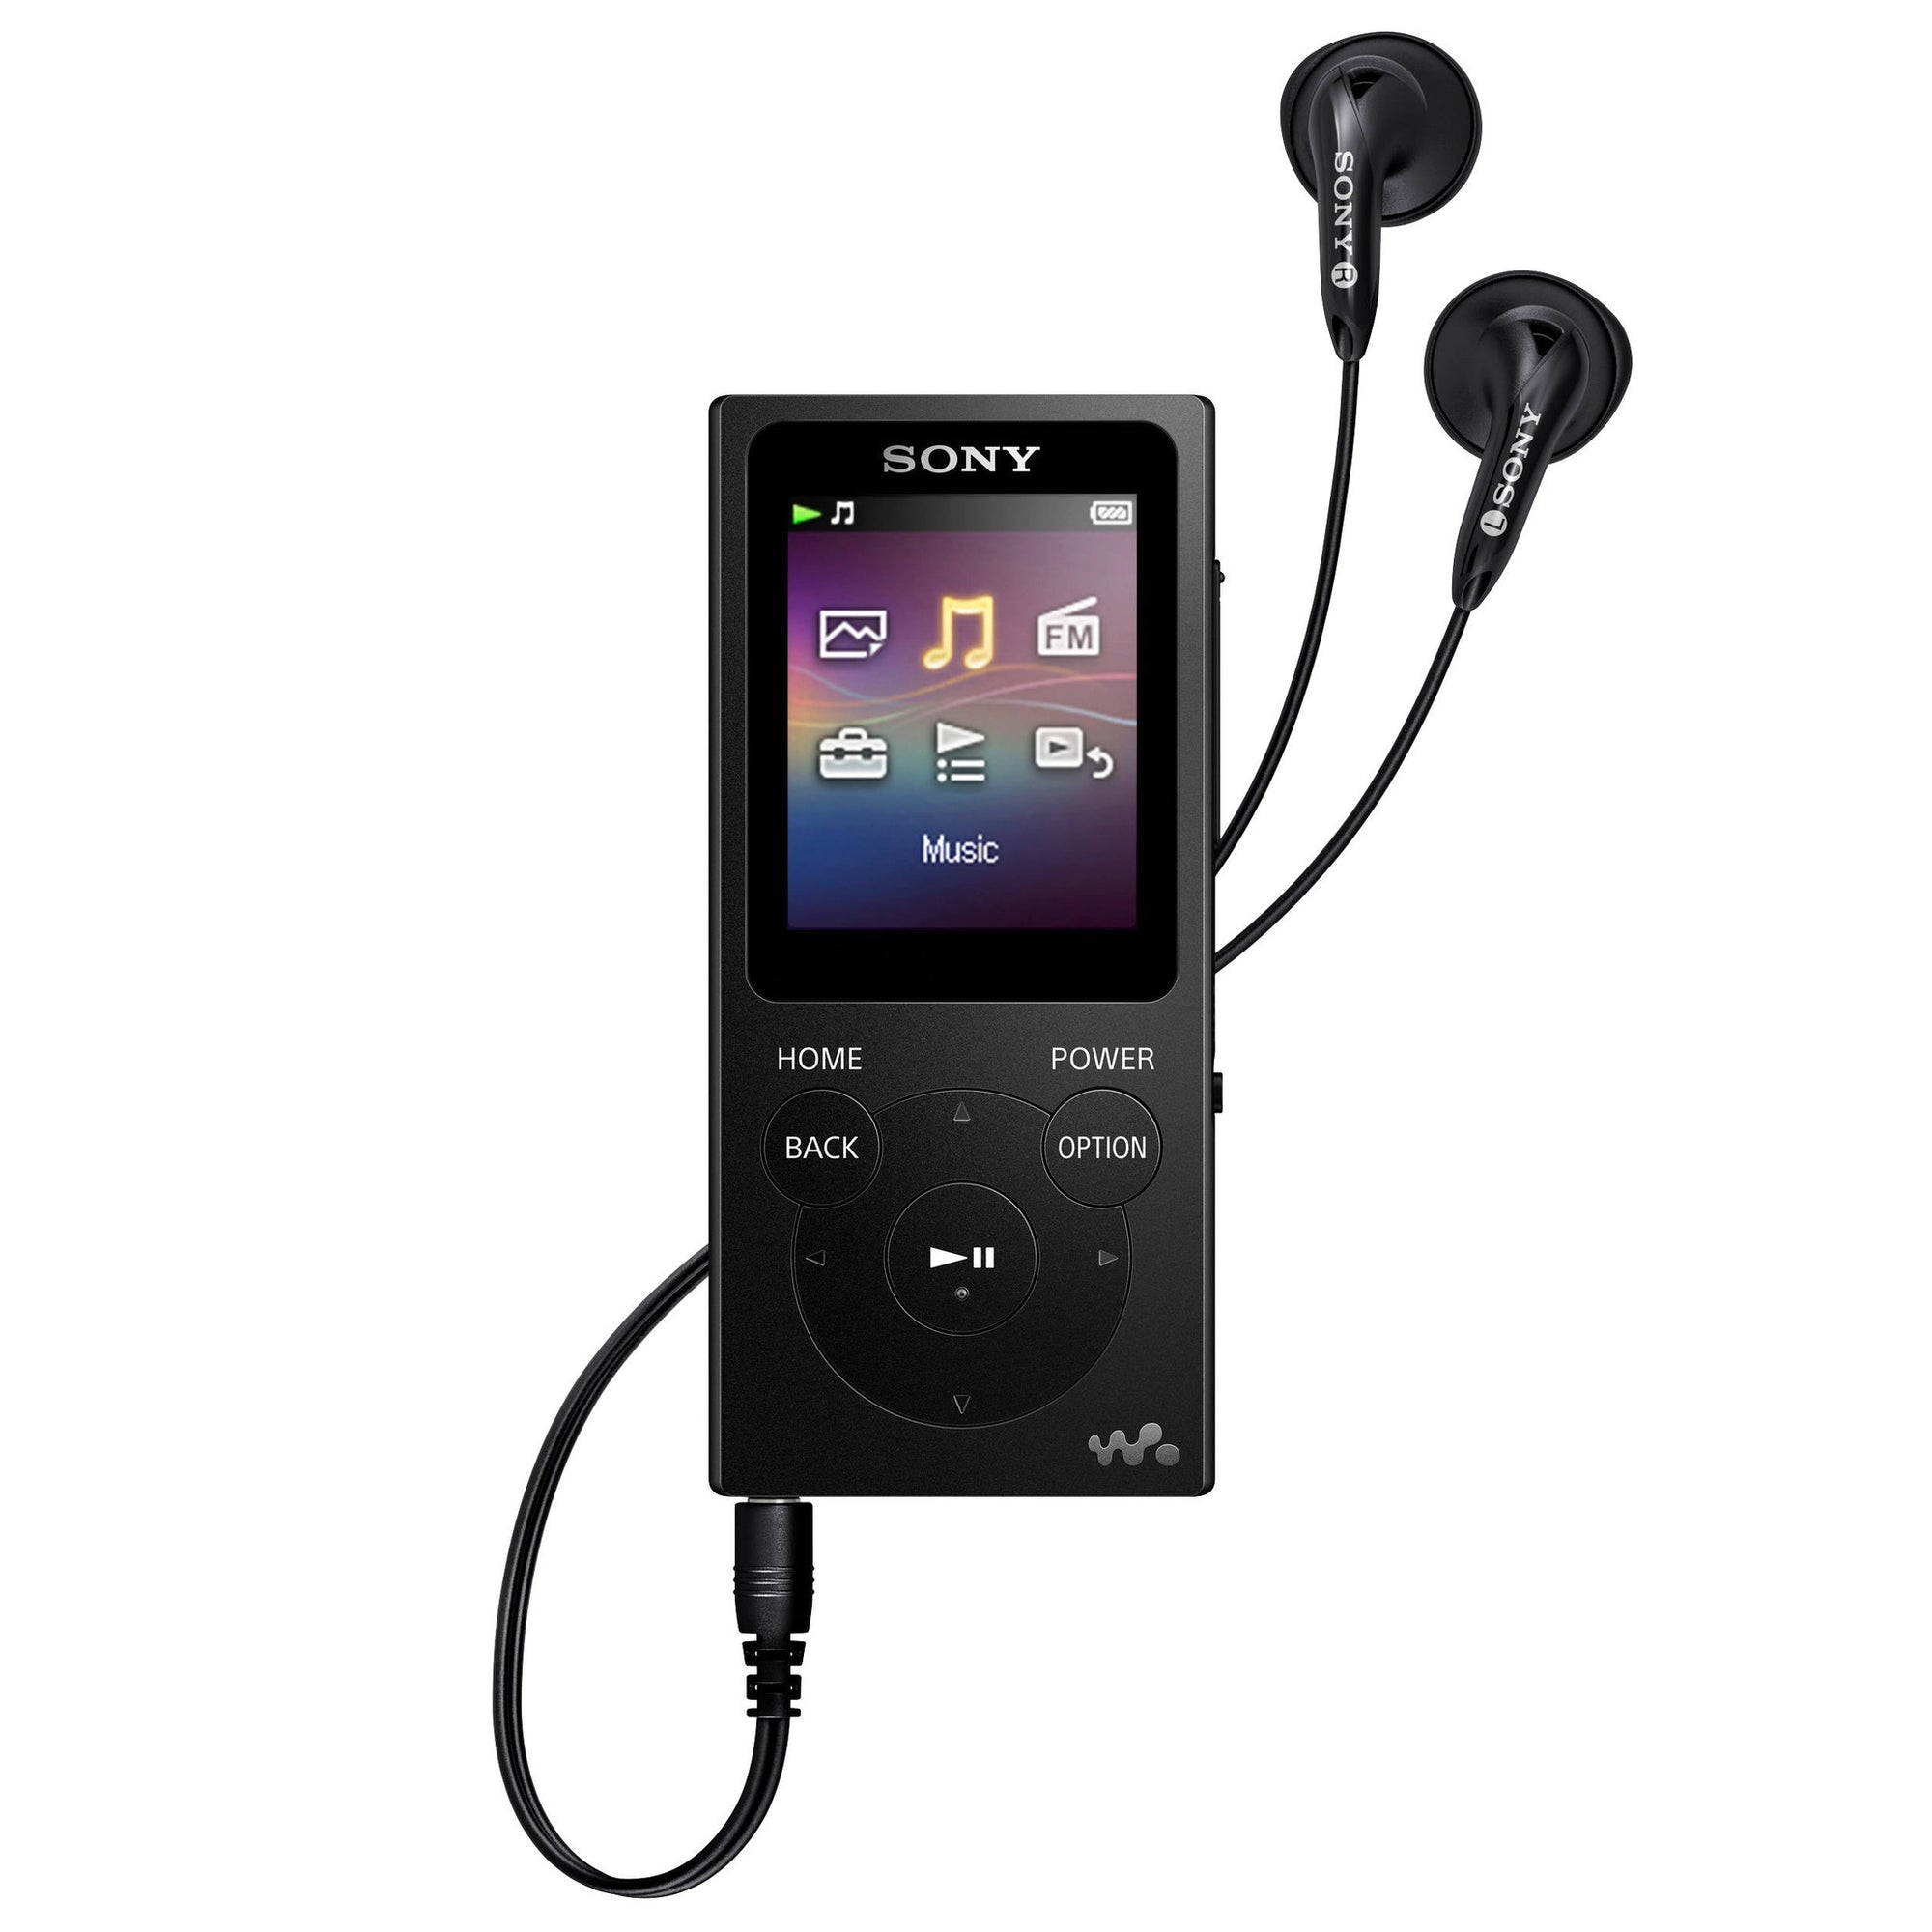 Sony NW-E394 MP3 Walkman